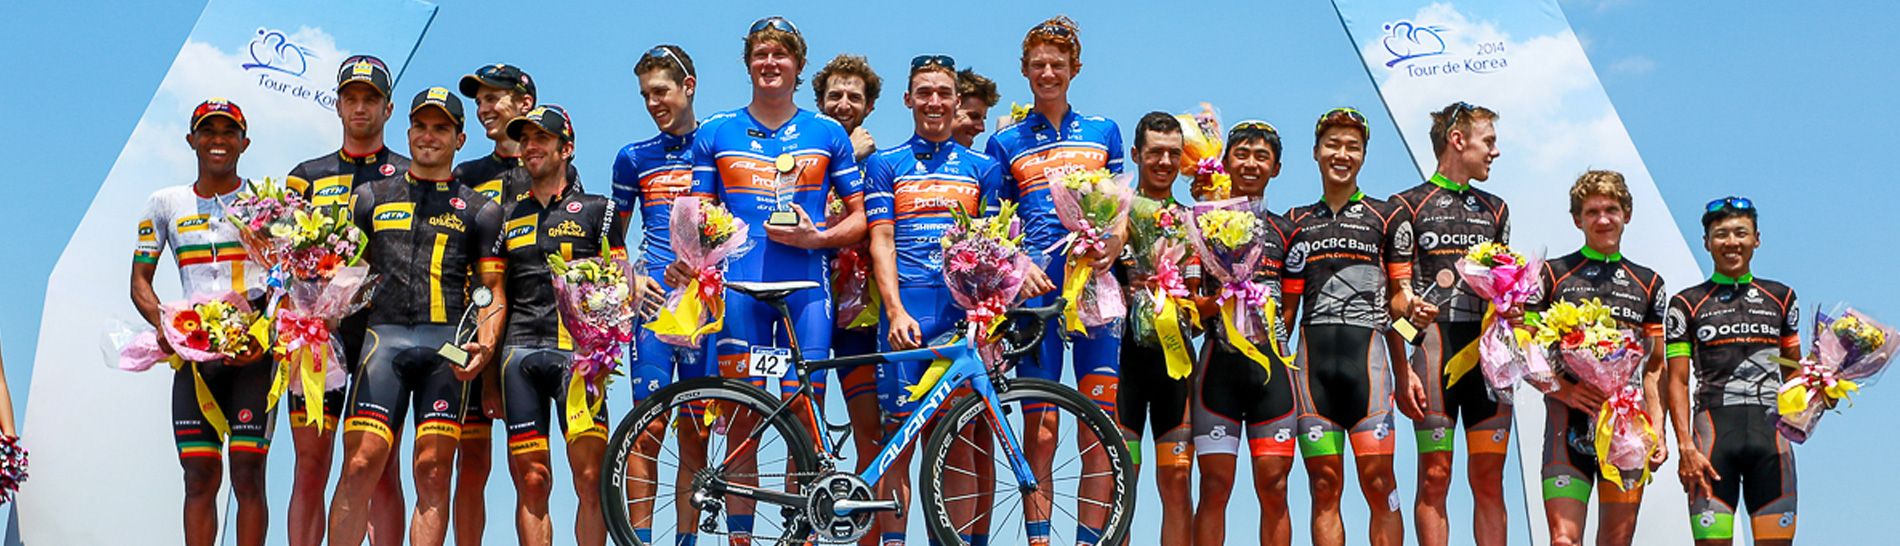 Tour de Korea: winning teams on the podium